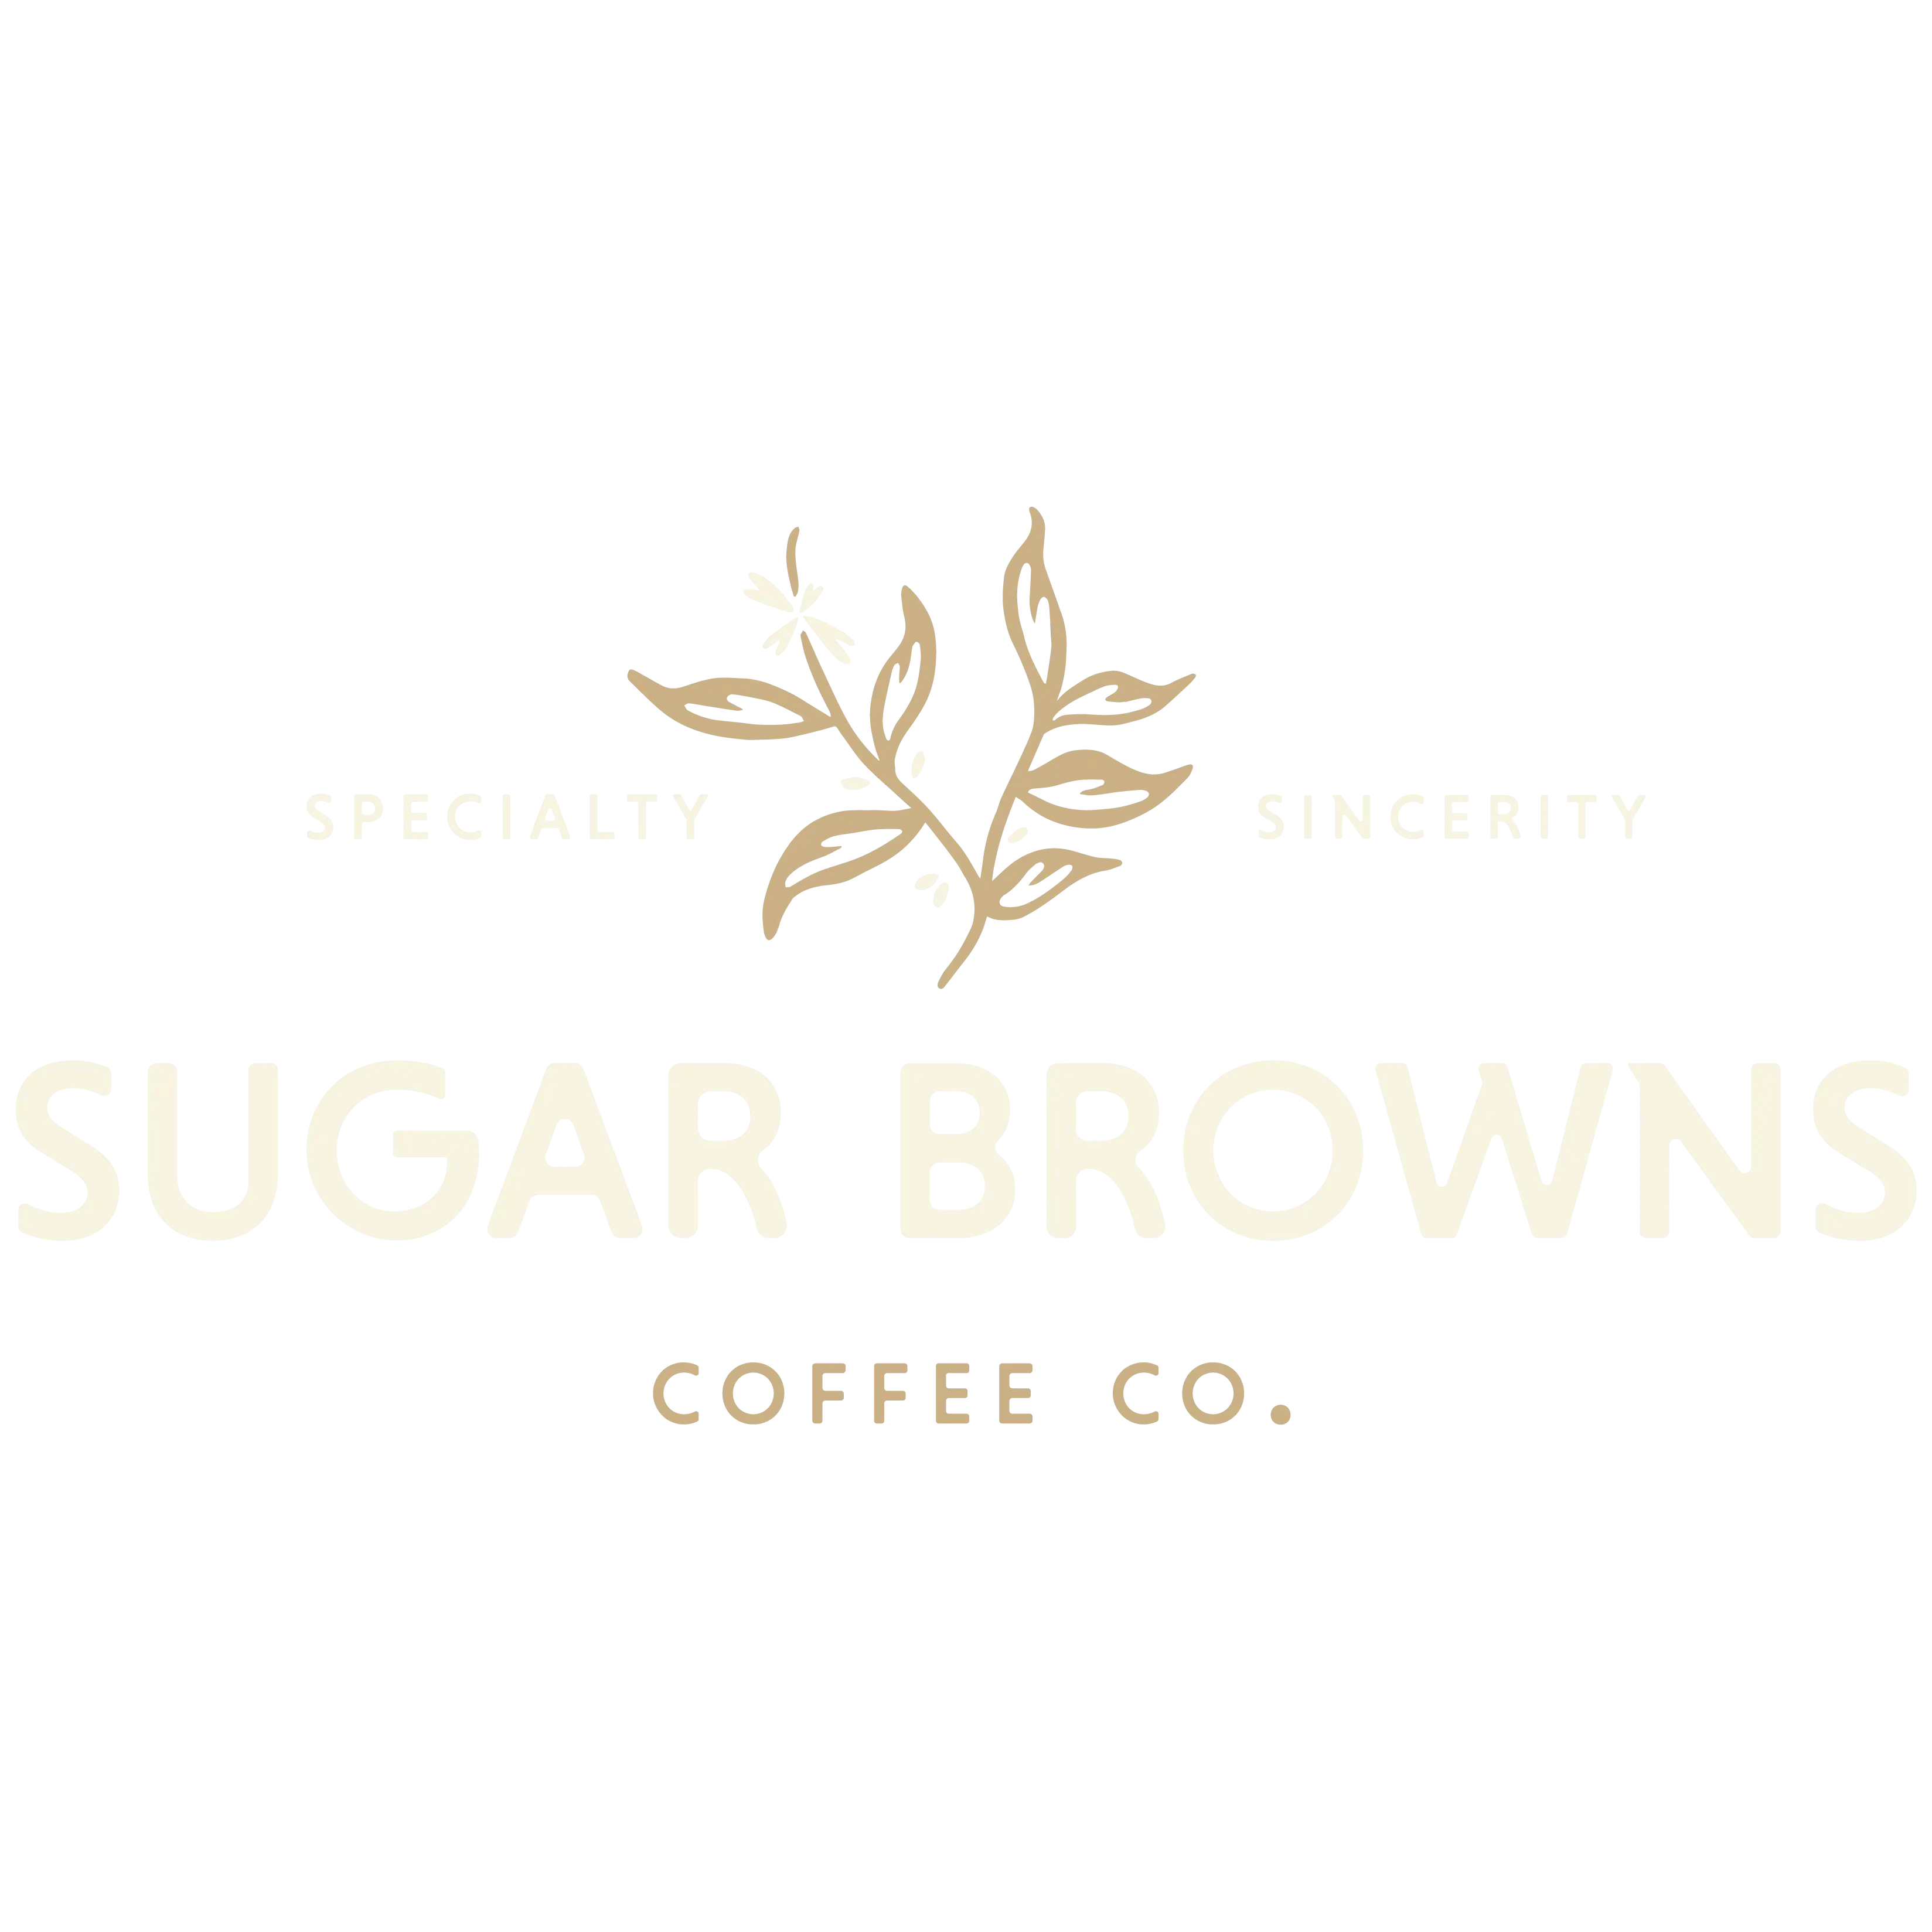 Sugar Browns logo app